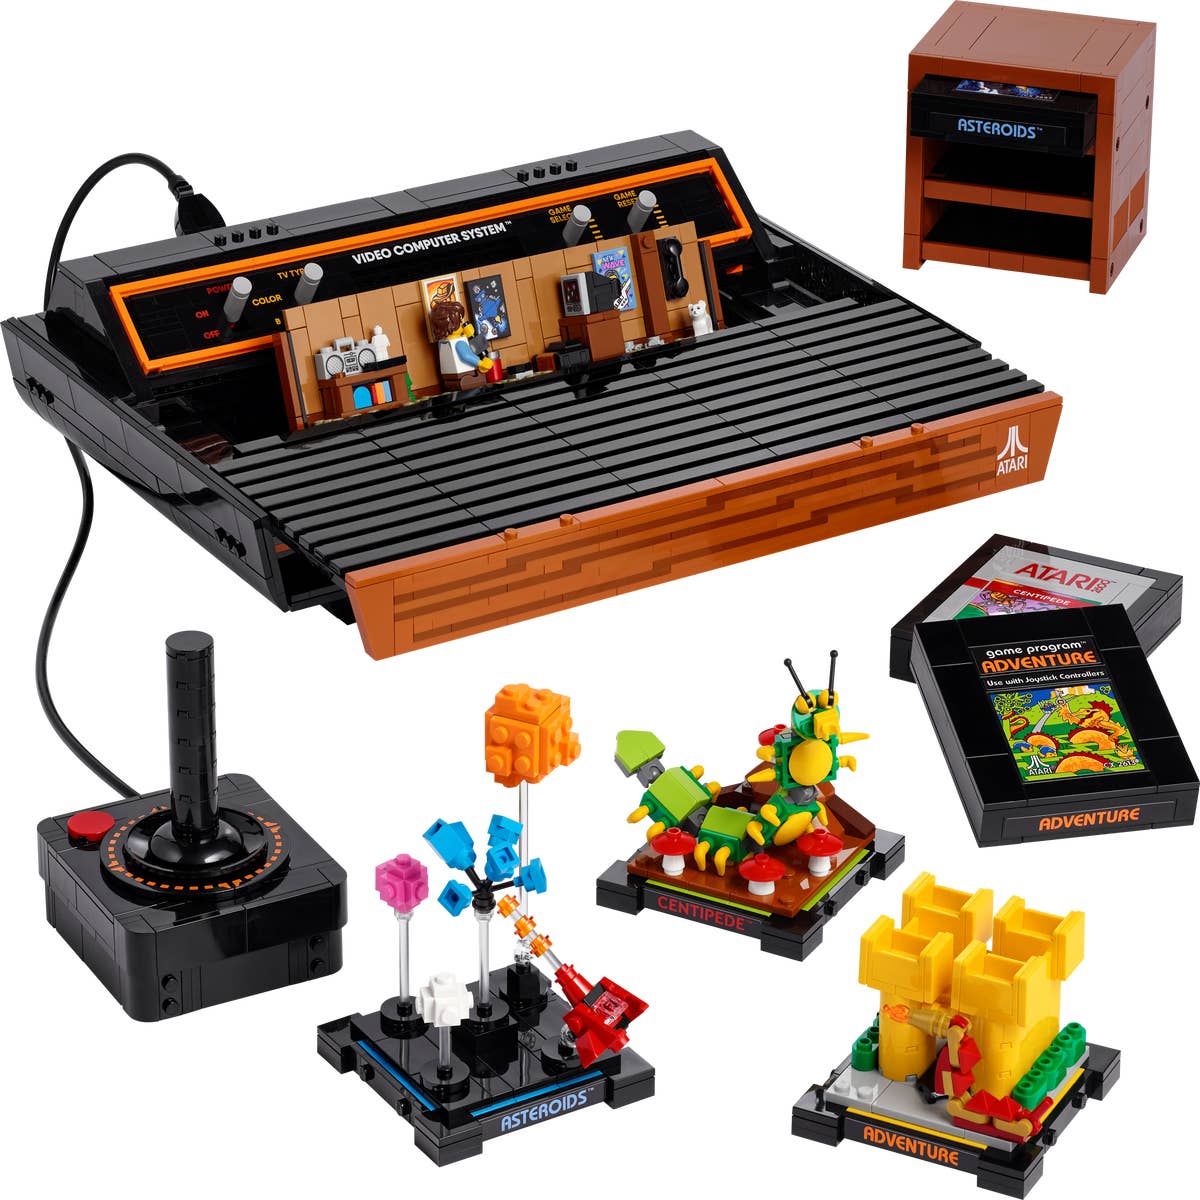 Lego's Atari 2600 is a brilliant bit of weaponized nostalgia – and